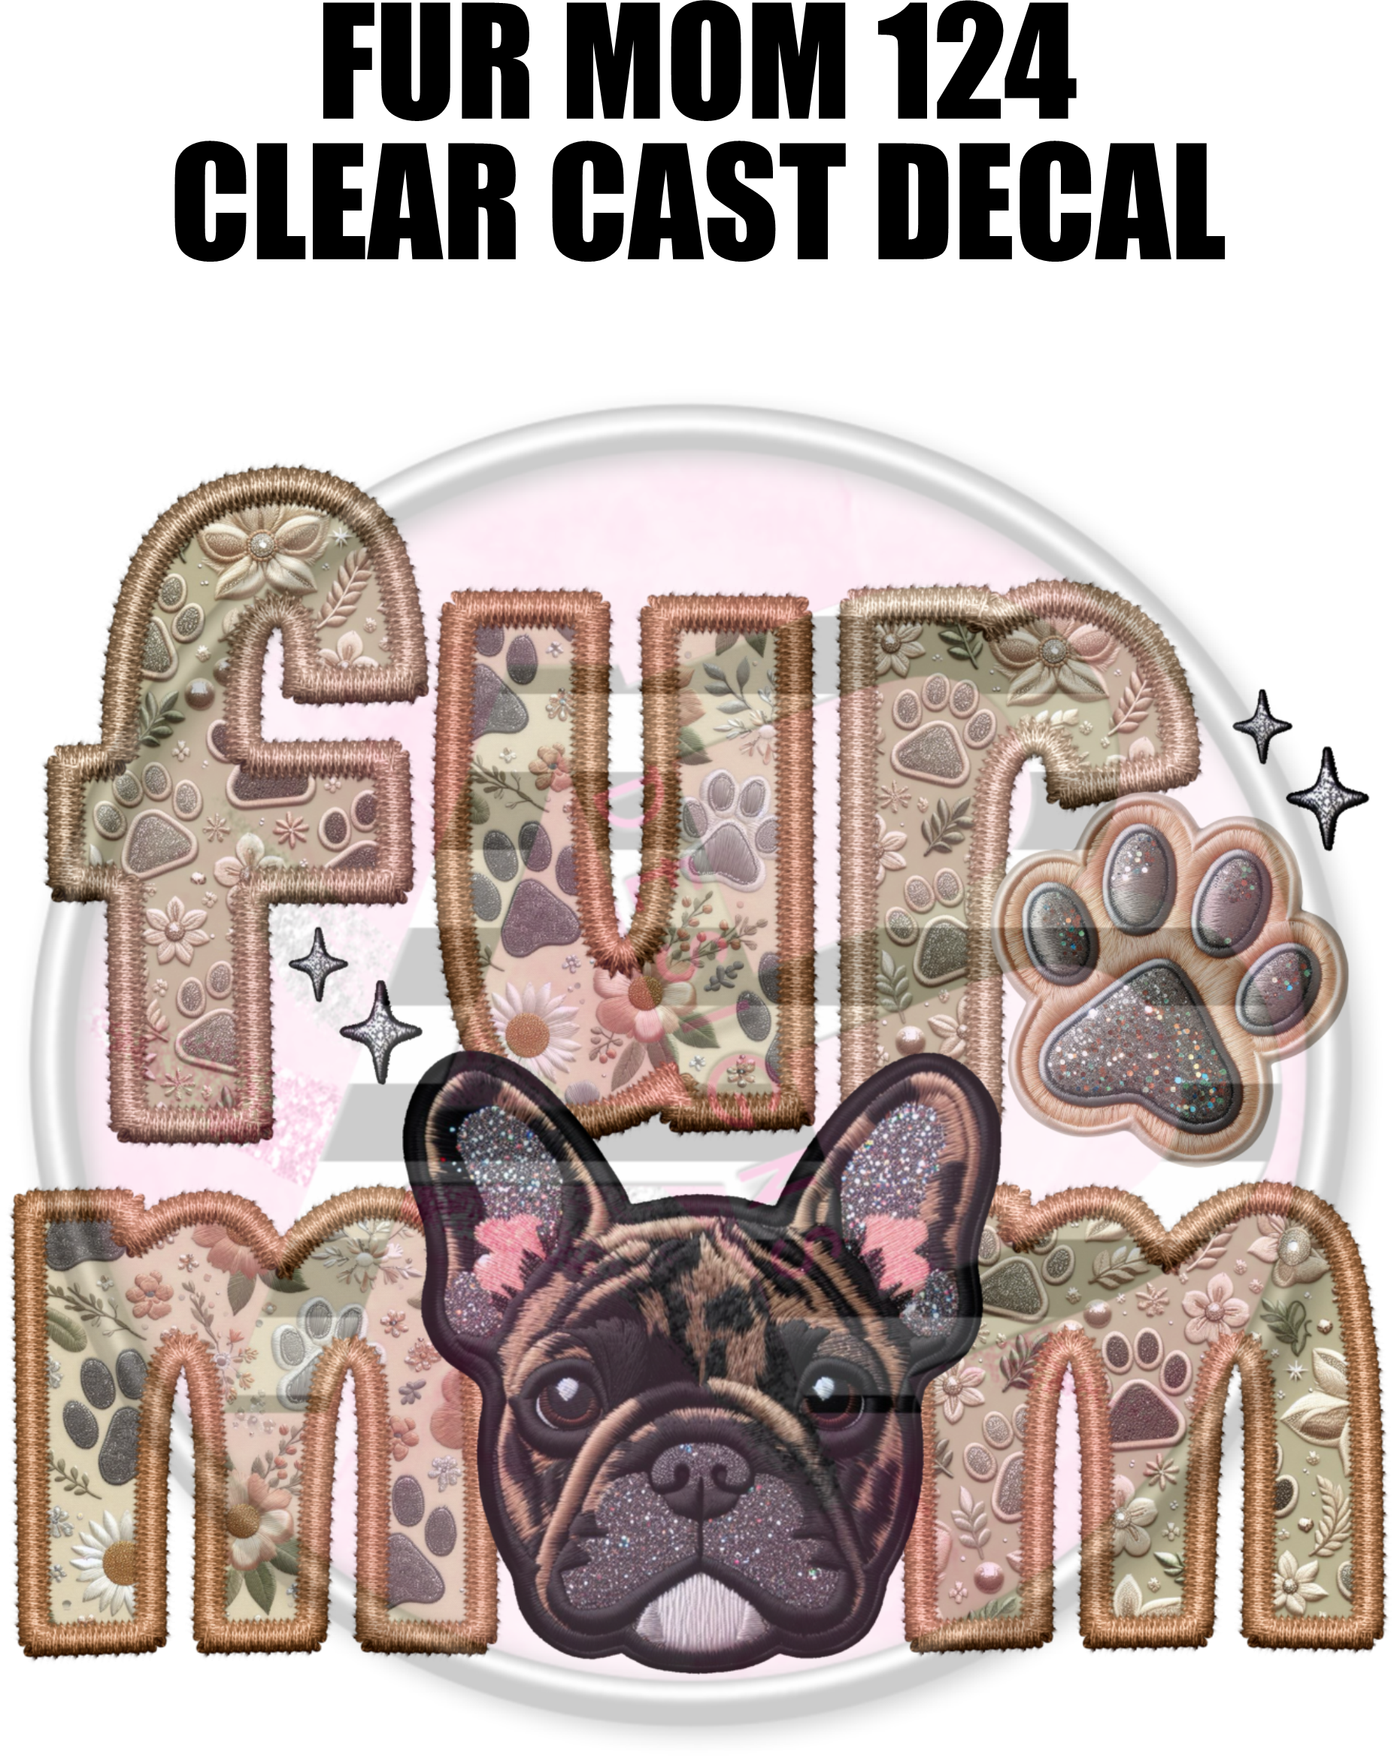 Fur Mom 124 - Clear Cast Decal